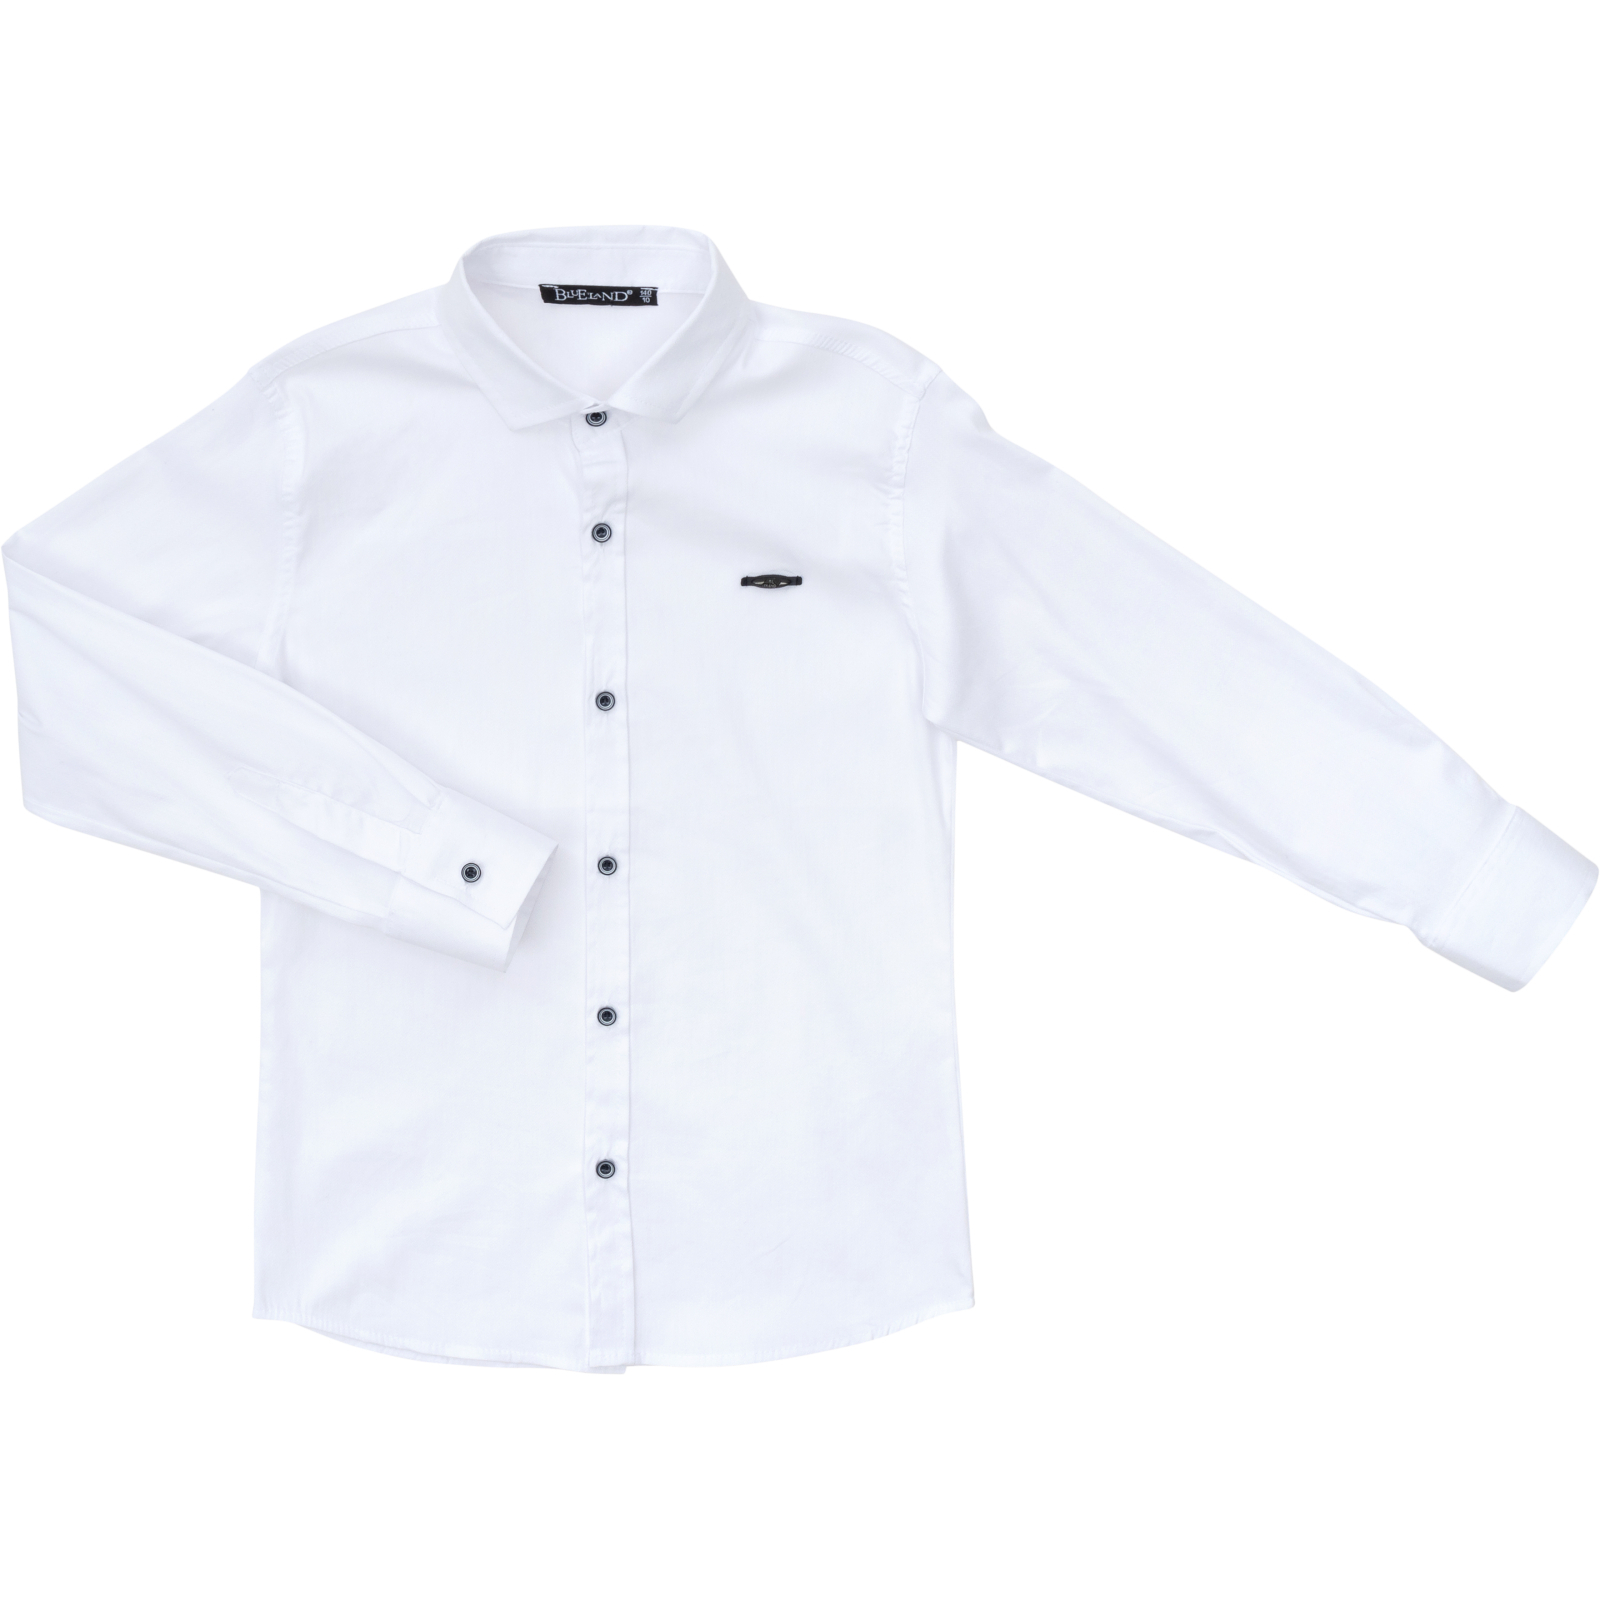 Рубашка Blueland с длинным рукавом (10680-146B-white)